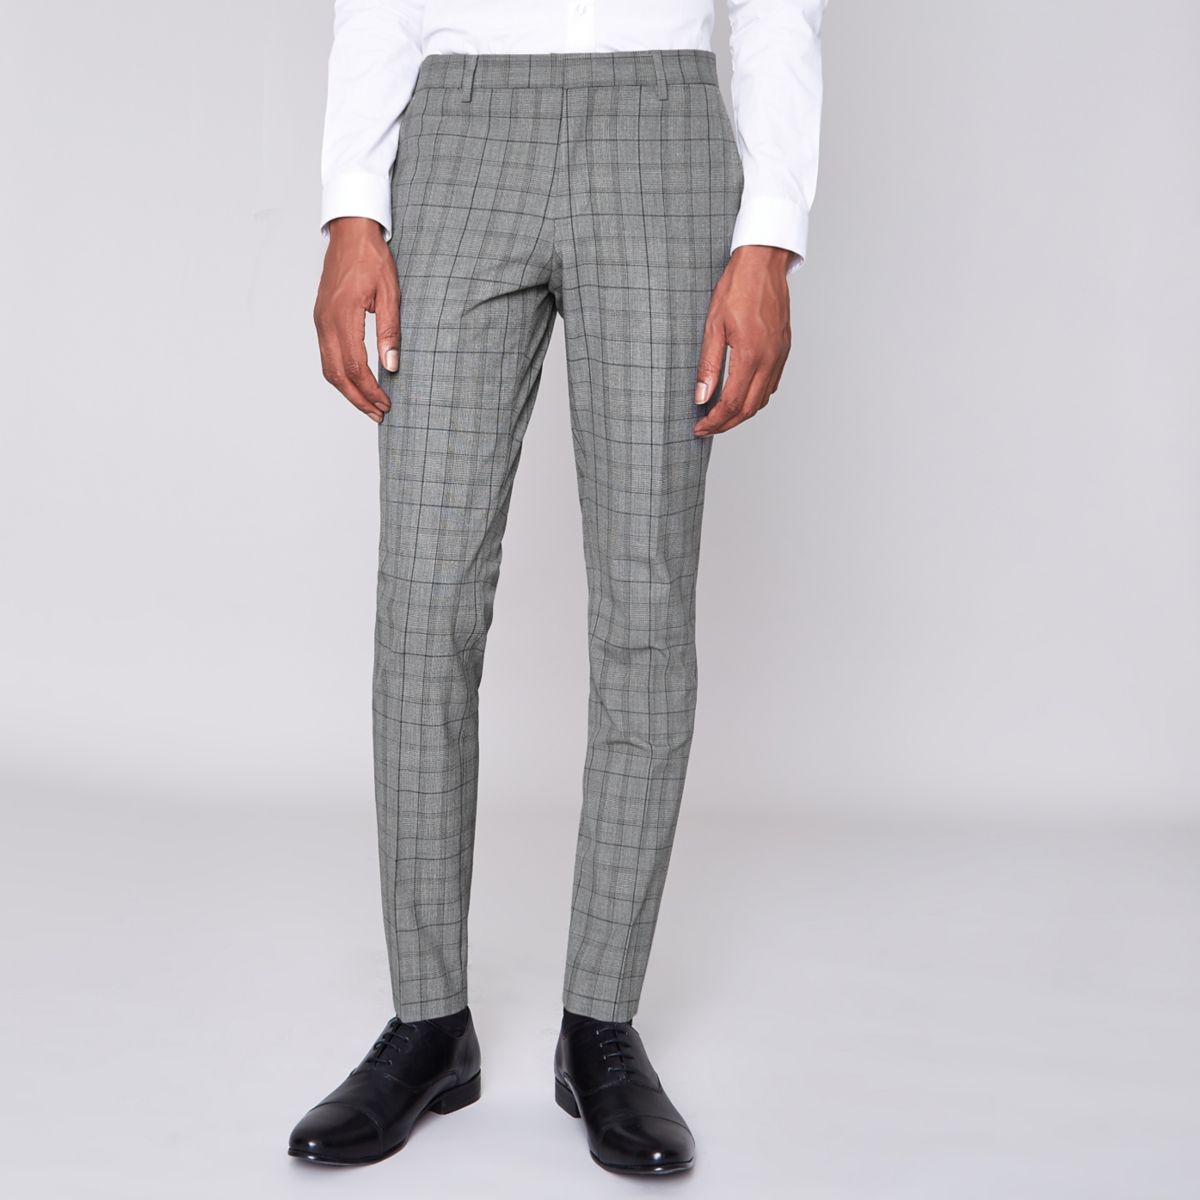 Grey Check Super Skinny Fit Suit Trousers Suit Trousers Suits Men